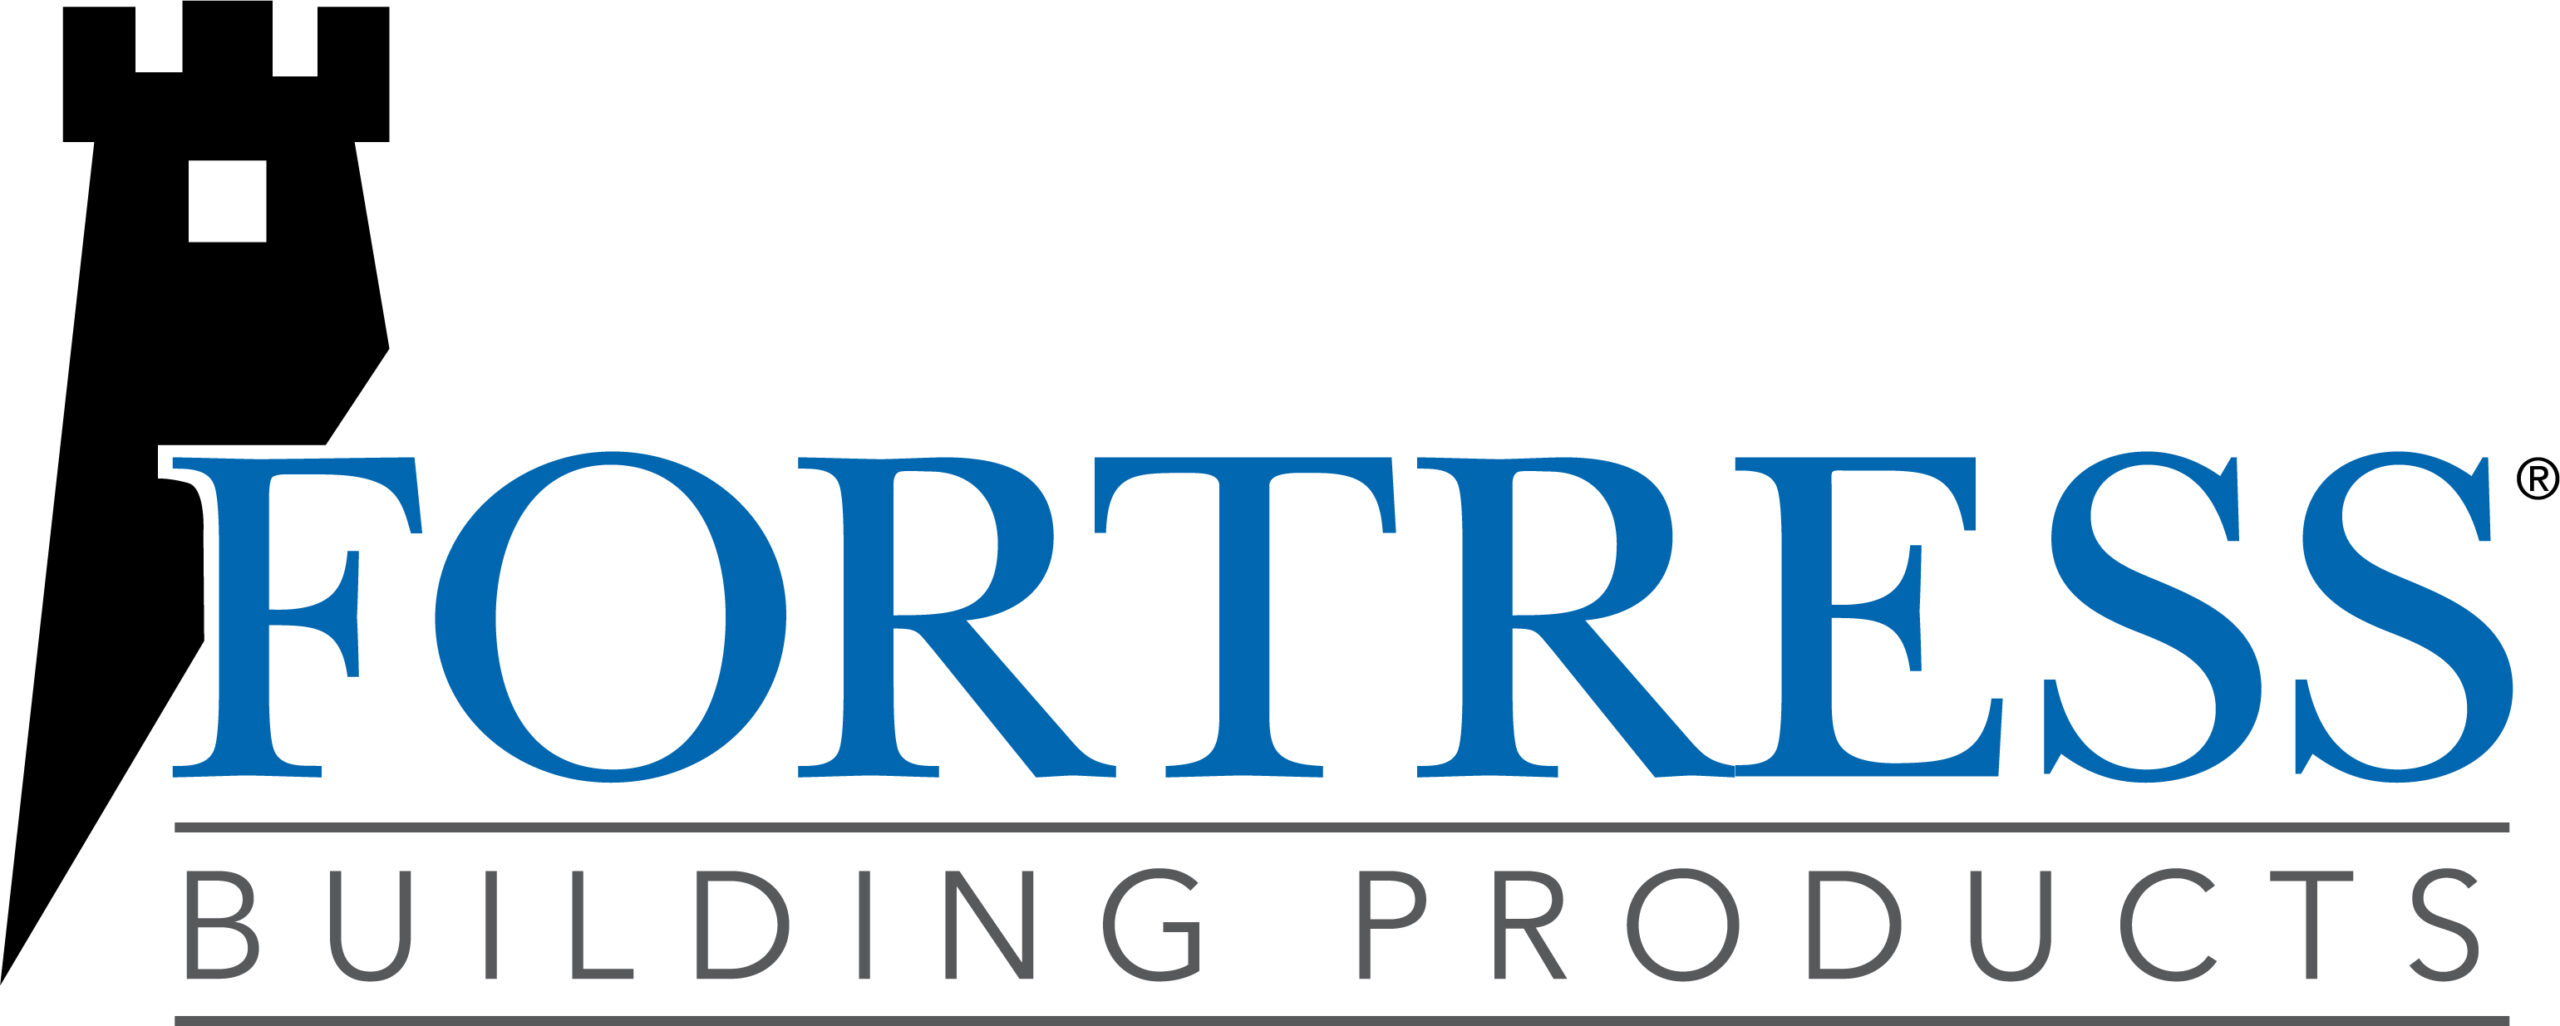 Fortress Products LLC logo